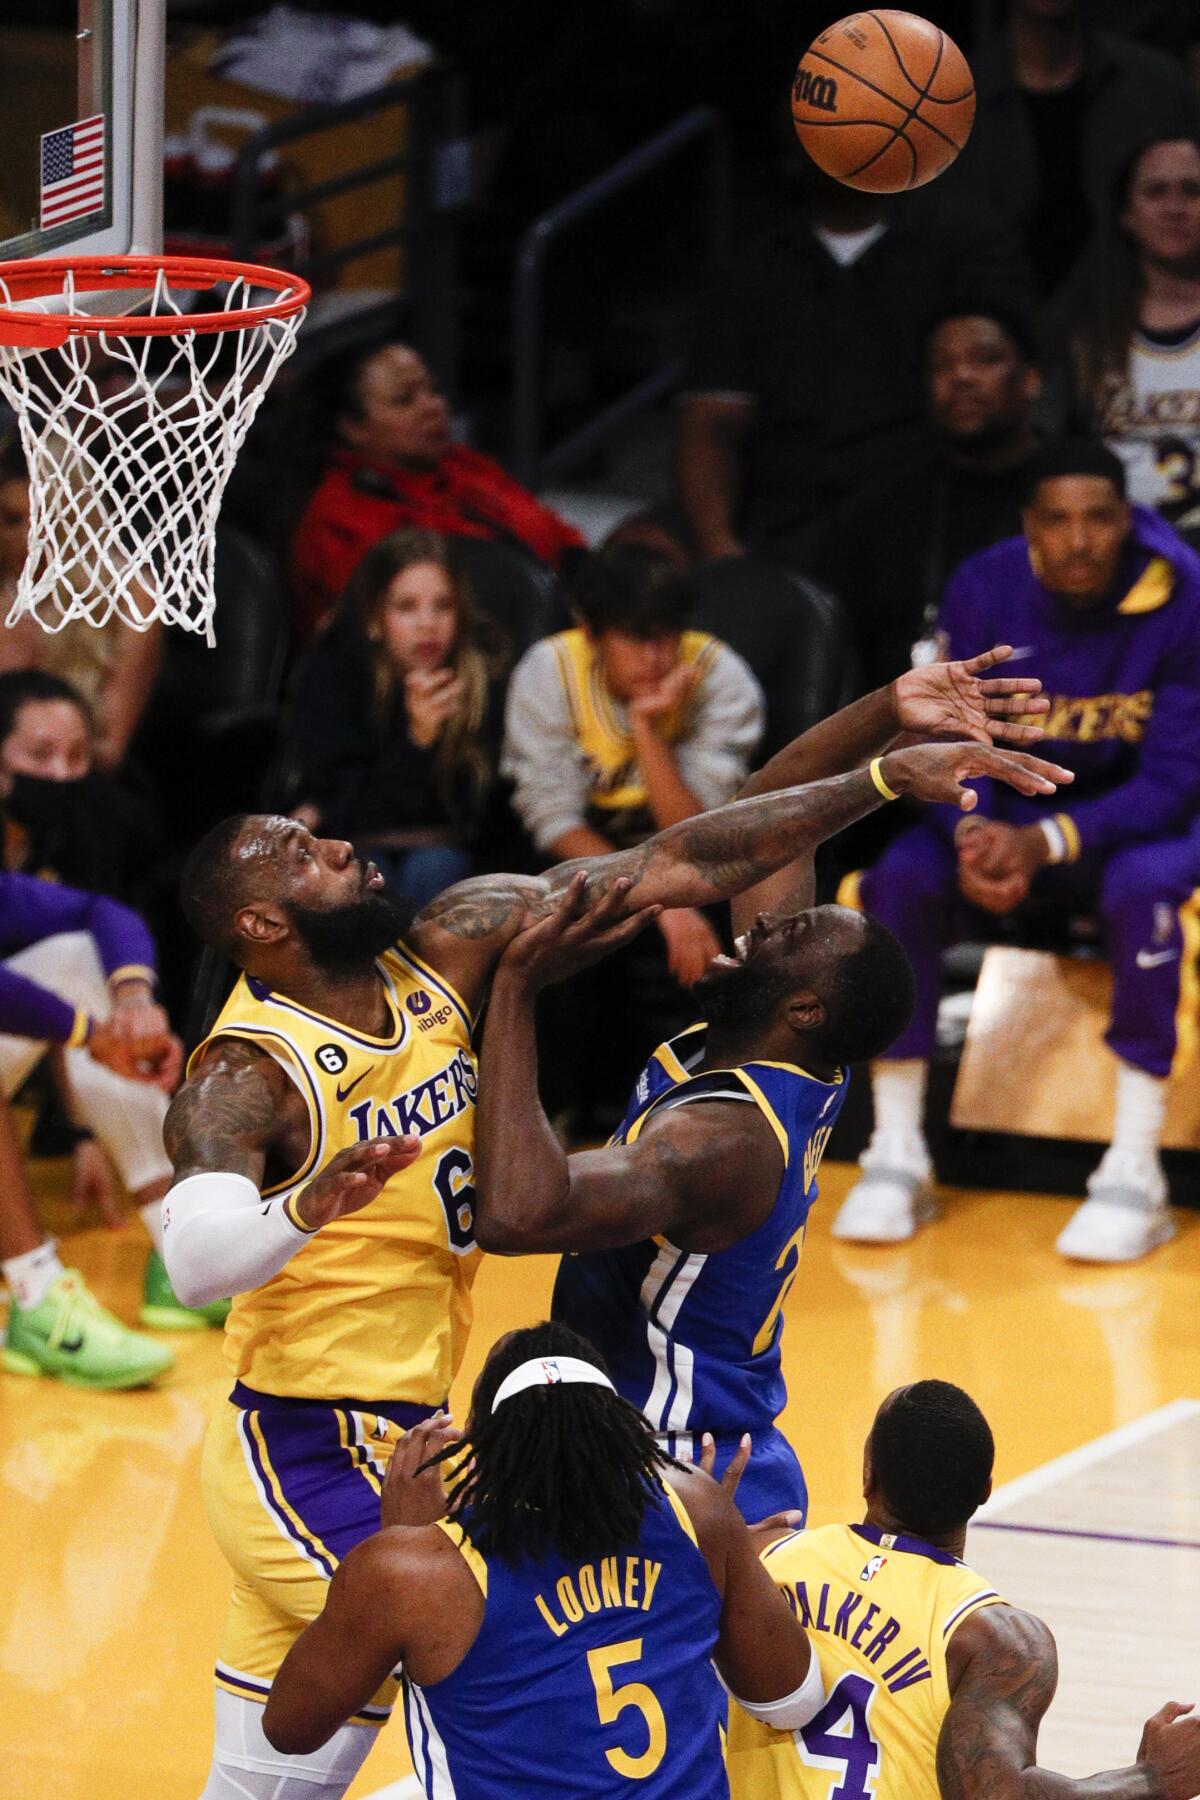 Lakers forward LeBron James jumps to block a shot by Warriors forward Draymond Green.